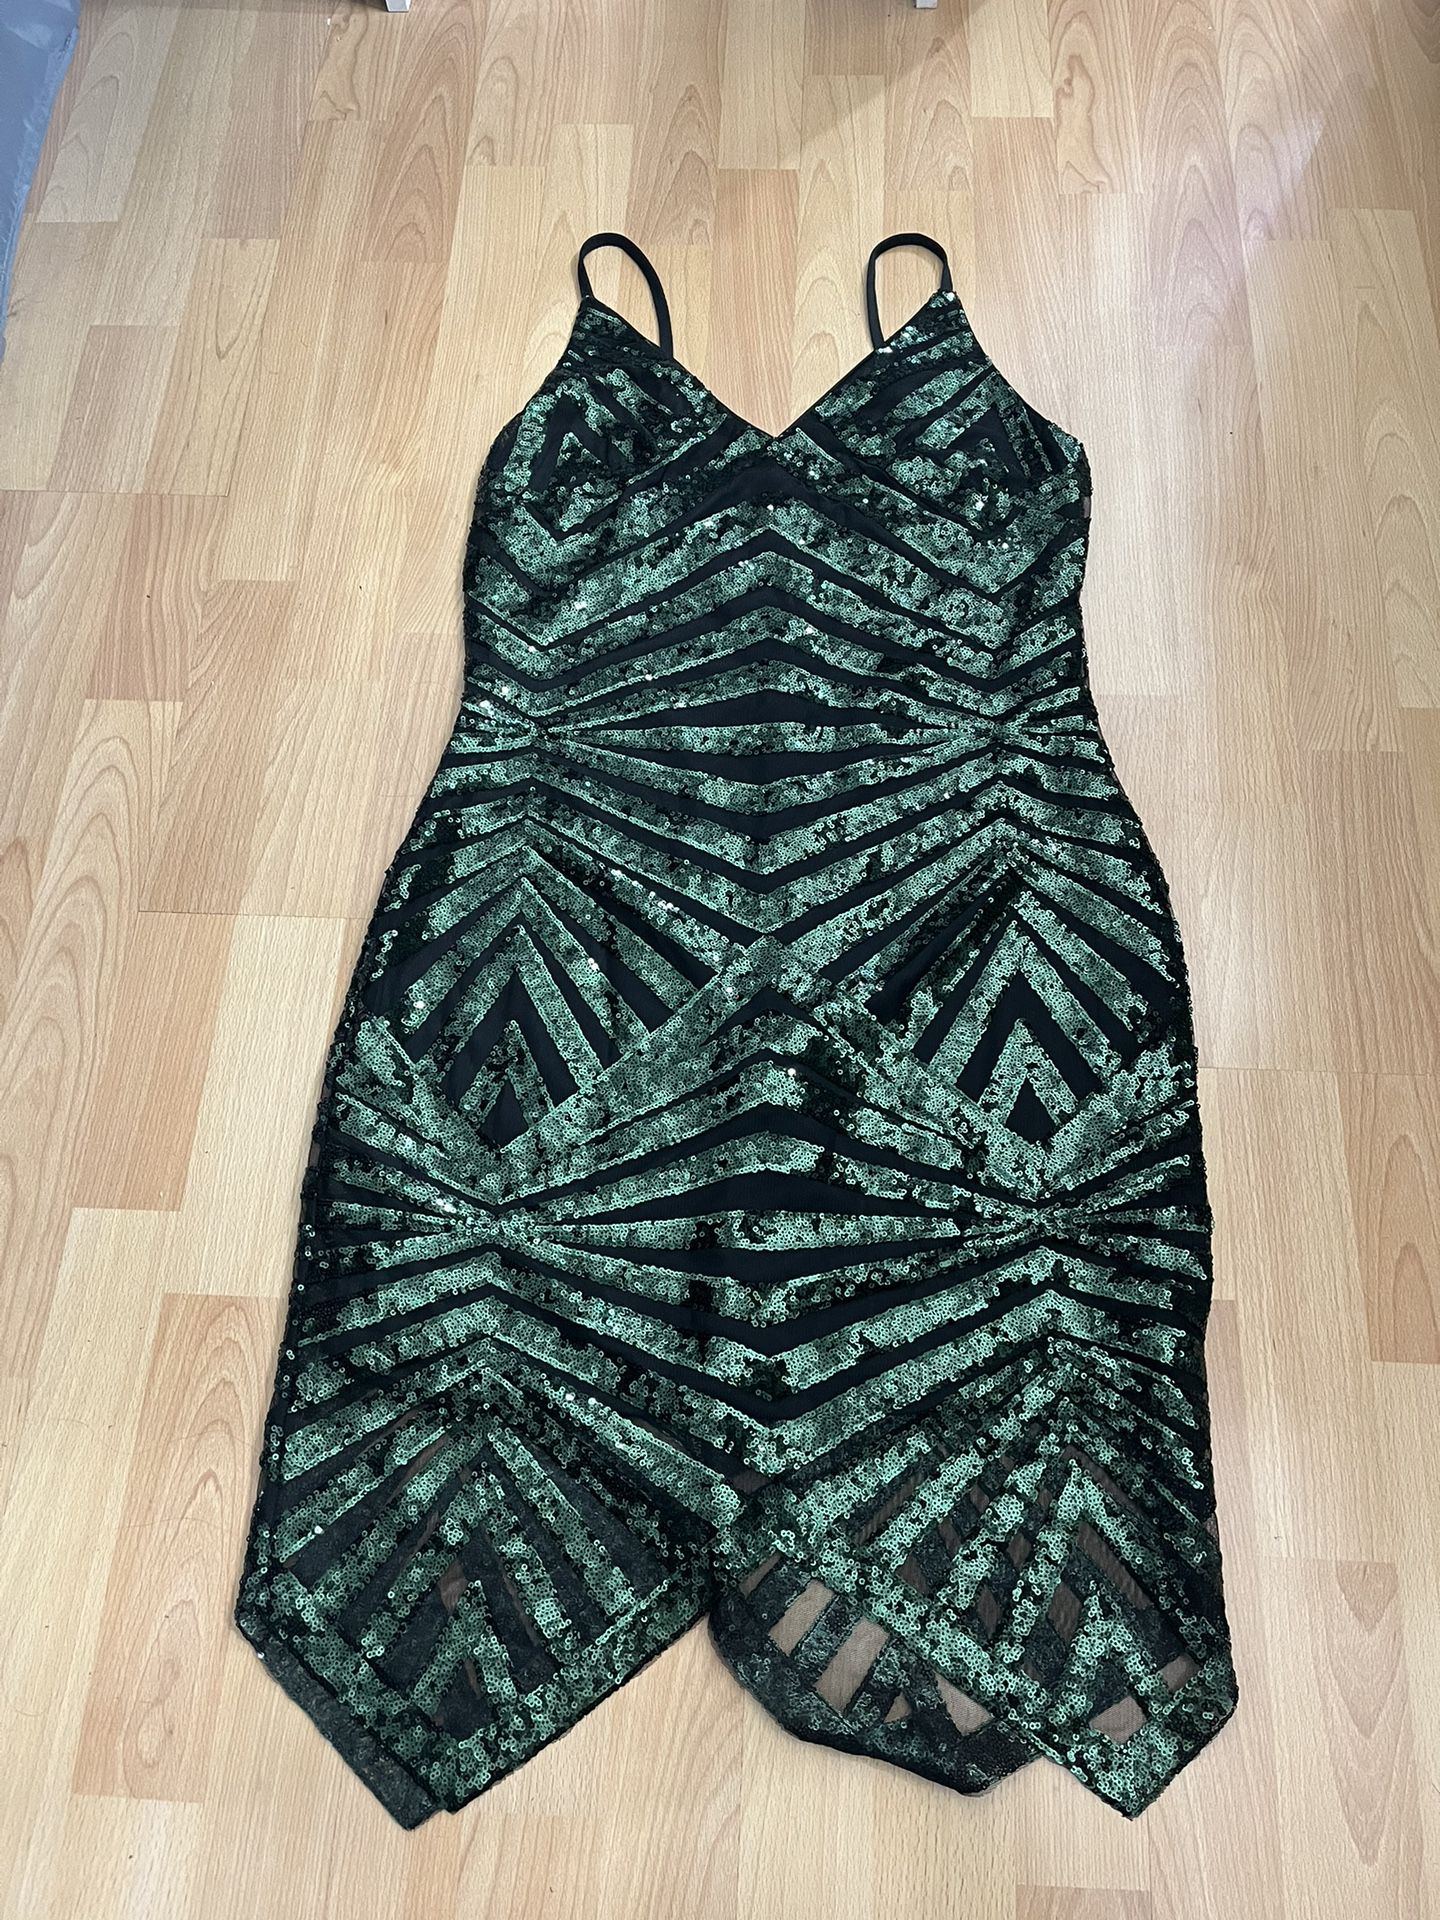 Green & Black Sequin Dress. Adult Size L